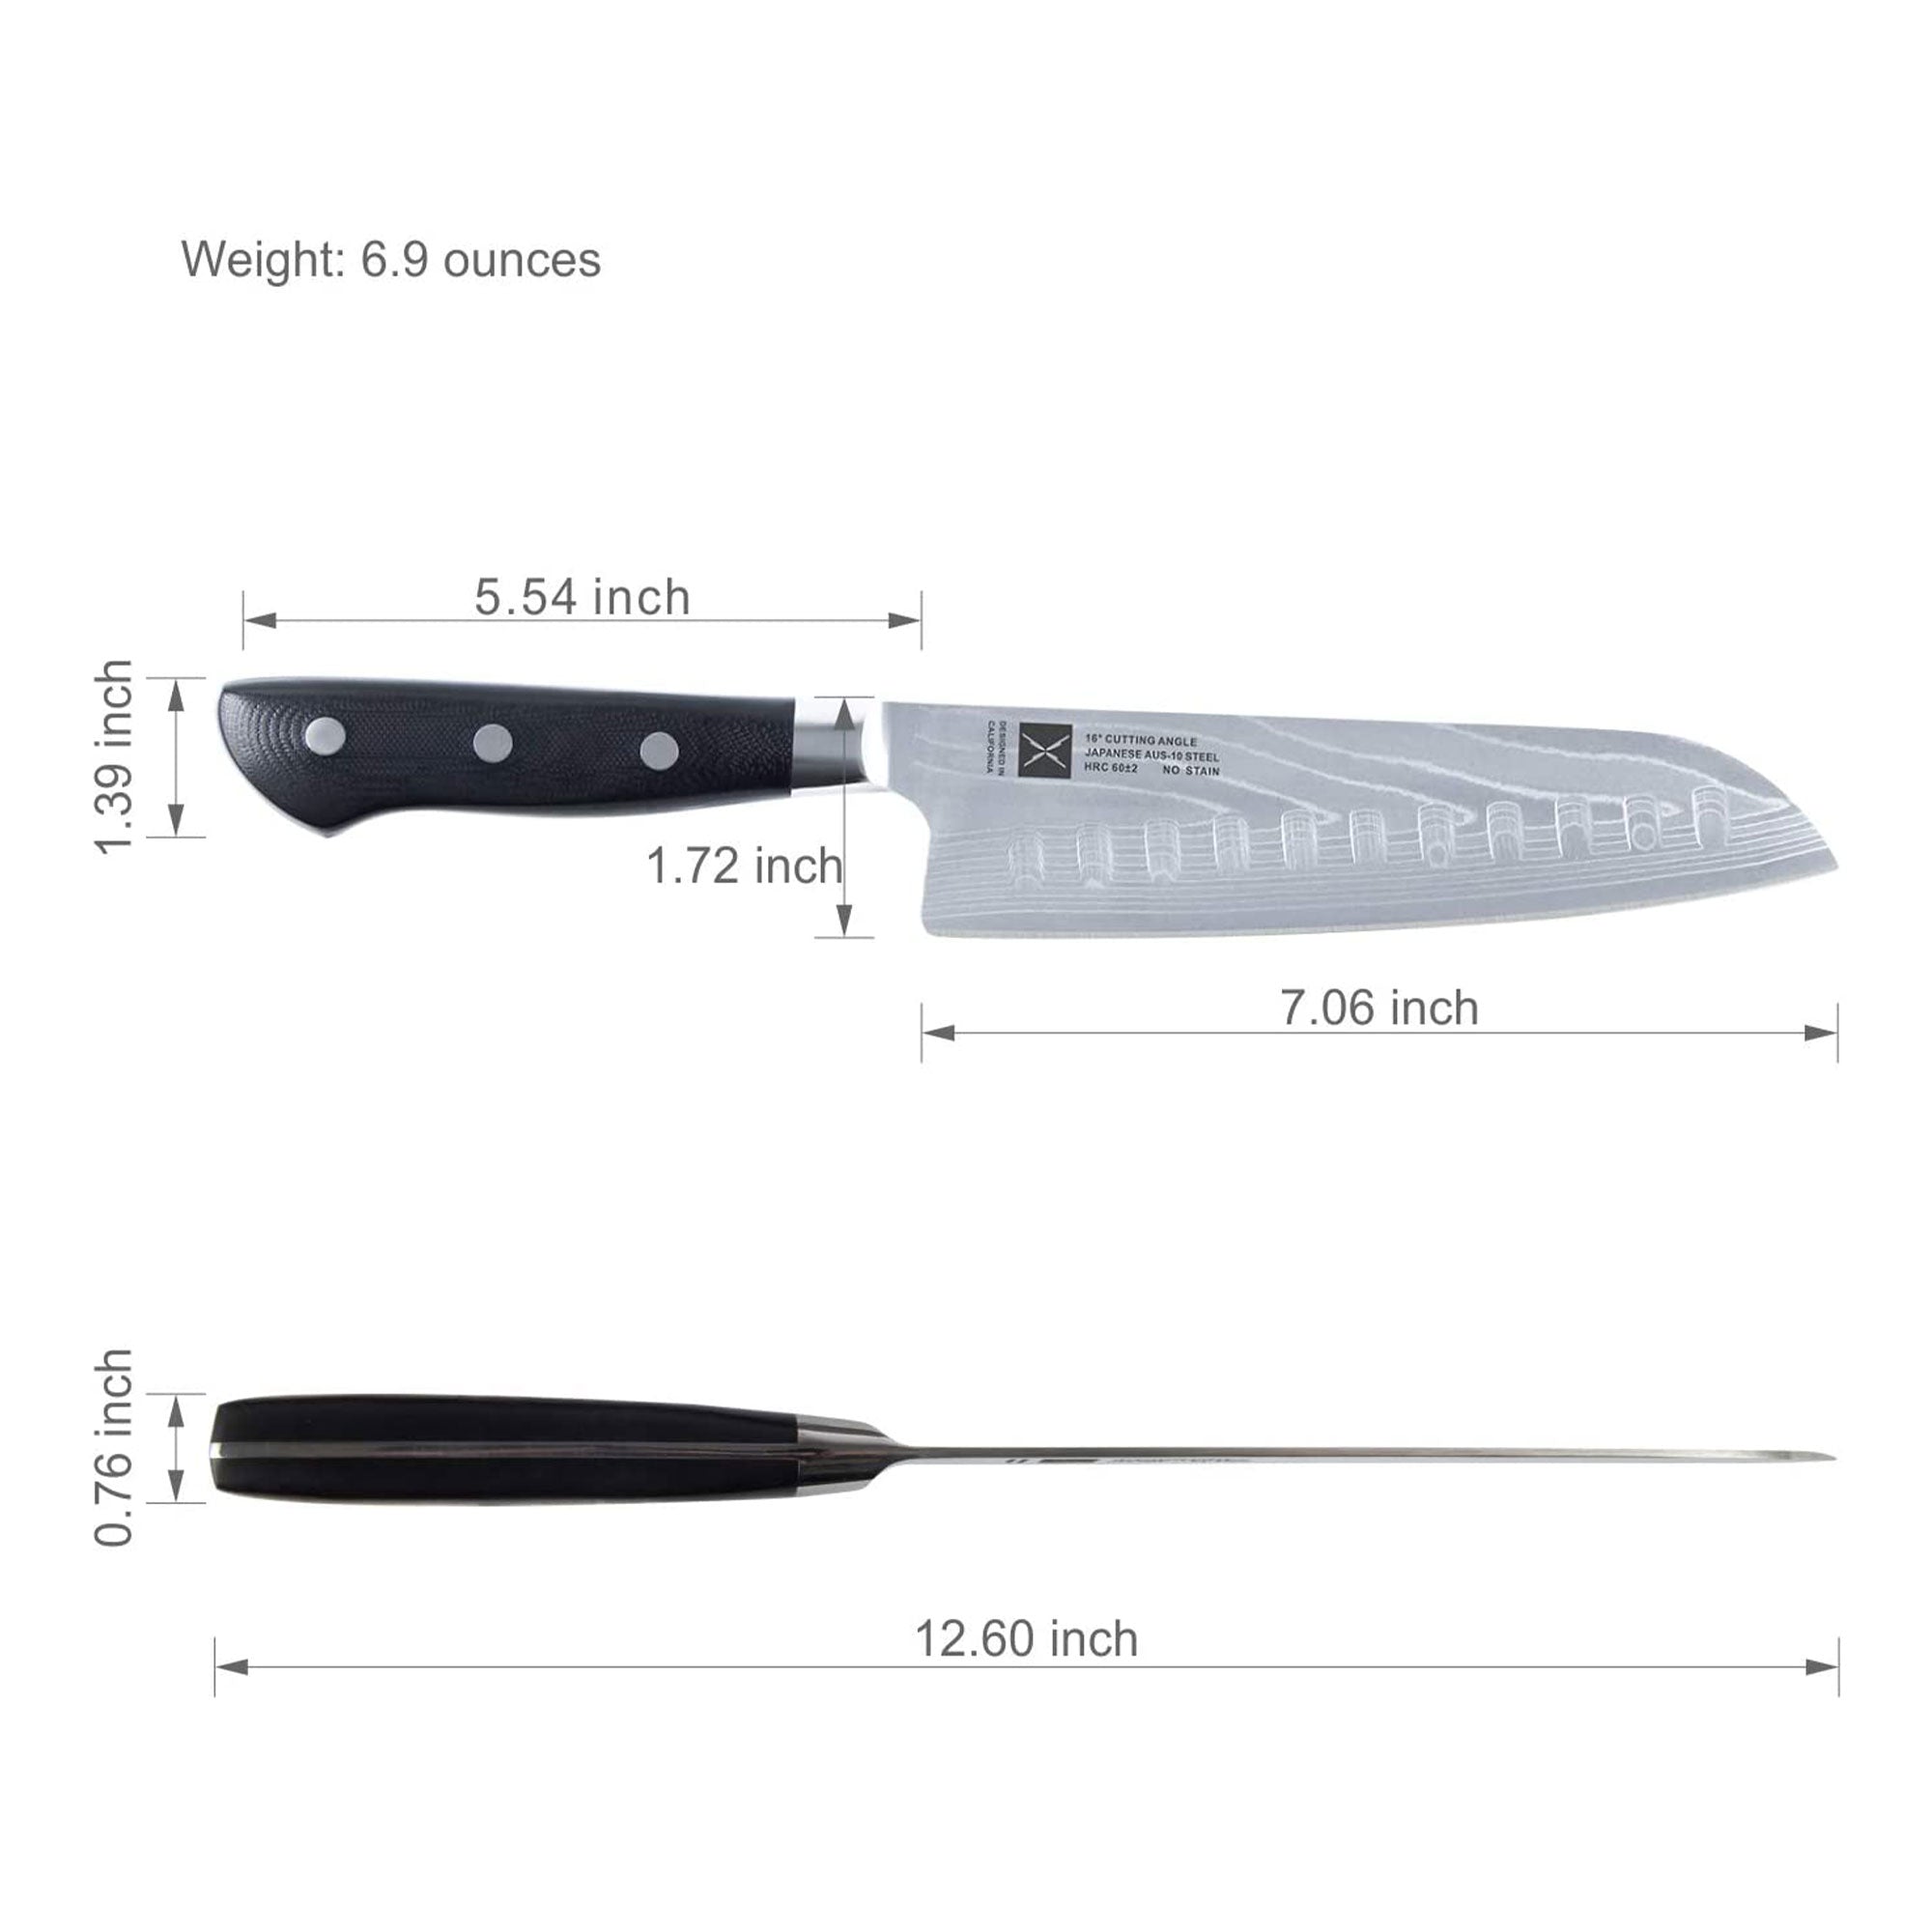 Chefs Knife 8 inch | Pro Series | Shan zu